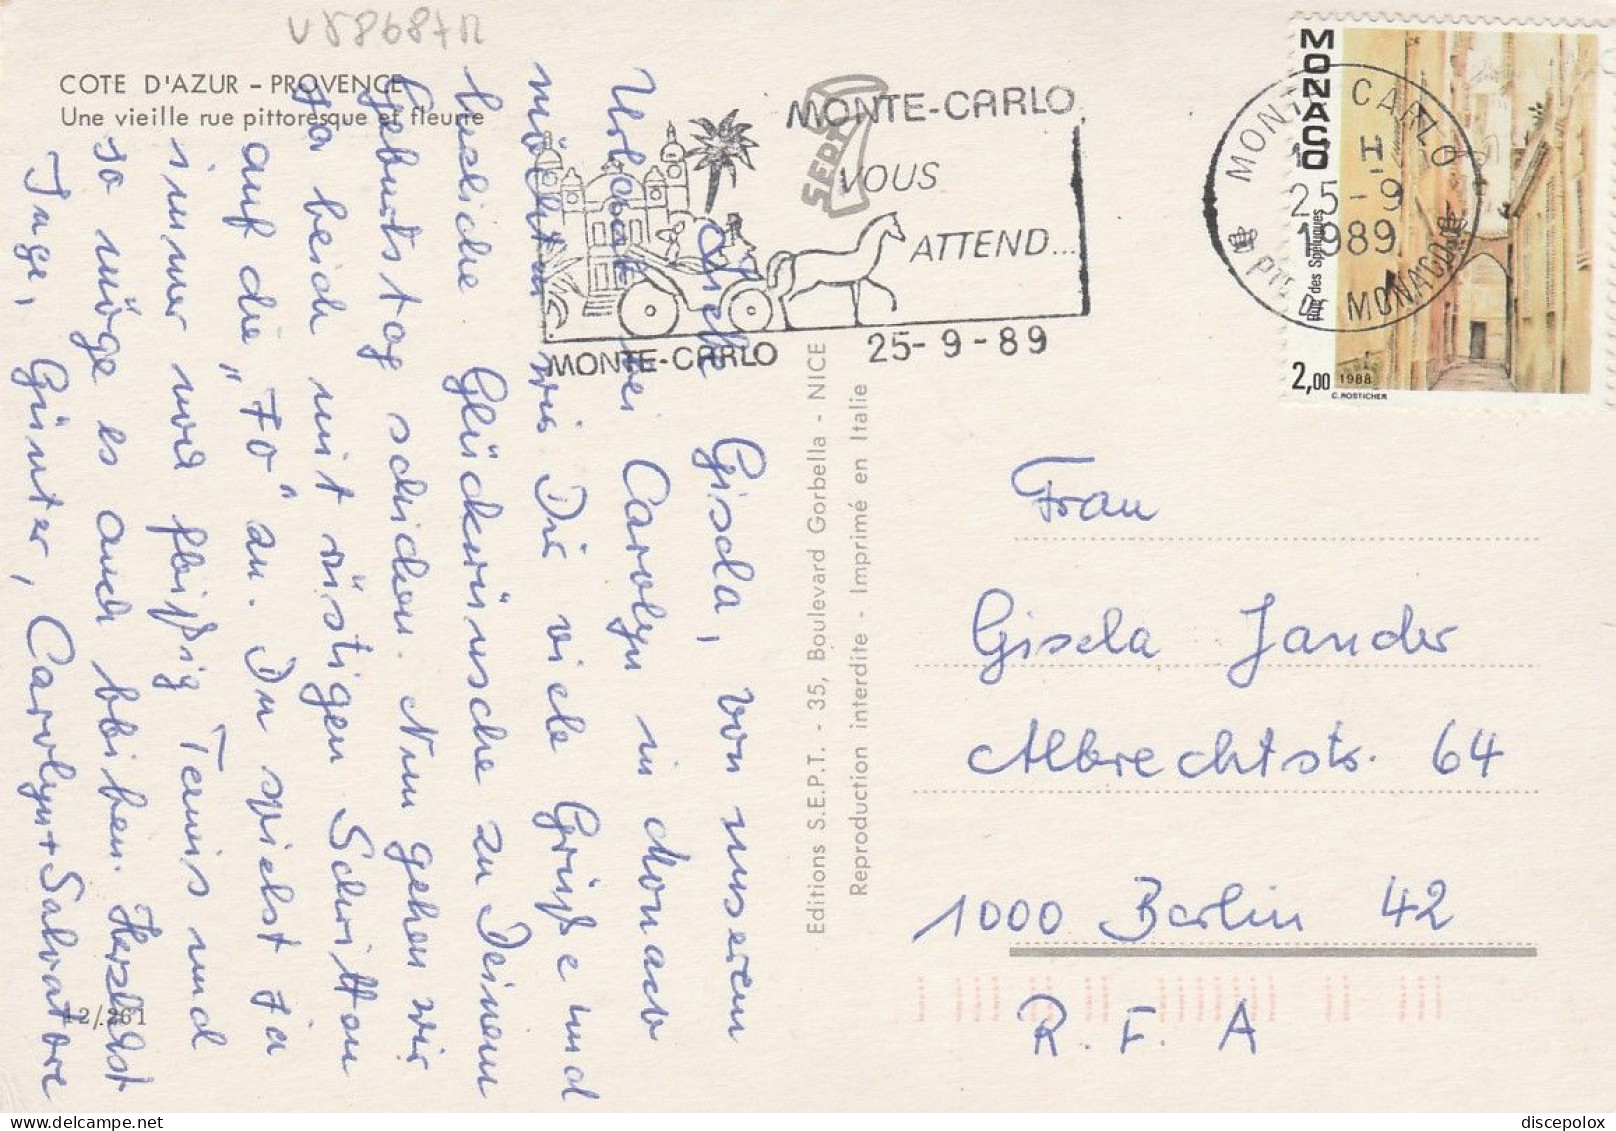 U5868 Monaco - 2 Francs Rue Des Spelugues - Nice Stamps Timbres Francobolli / Viaggiata 1989 - Covers & Documents